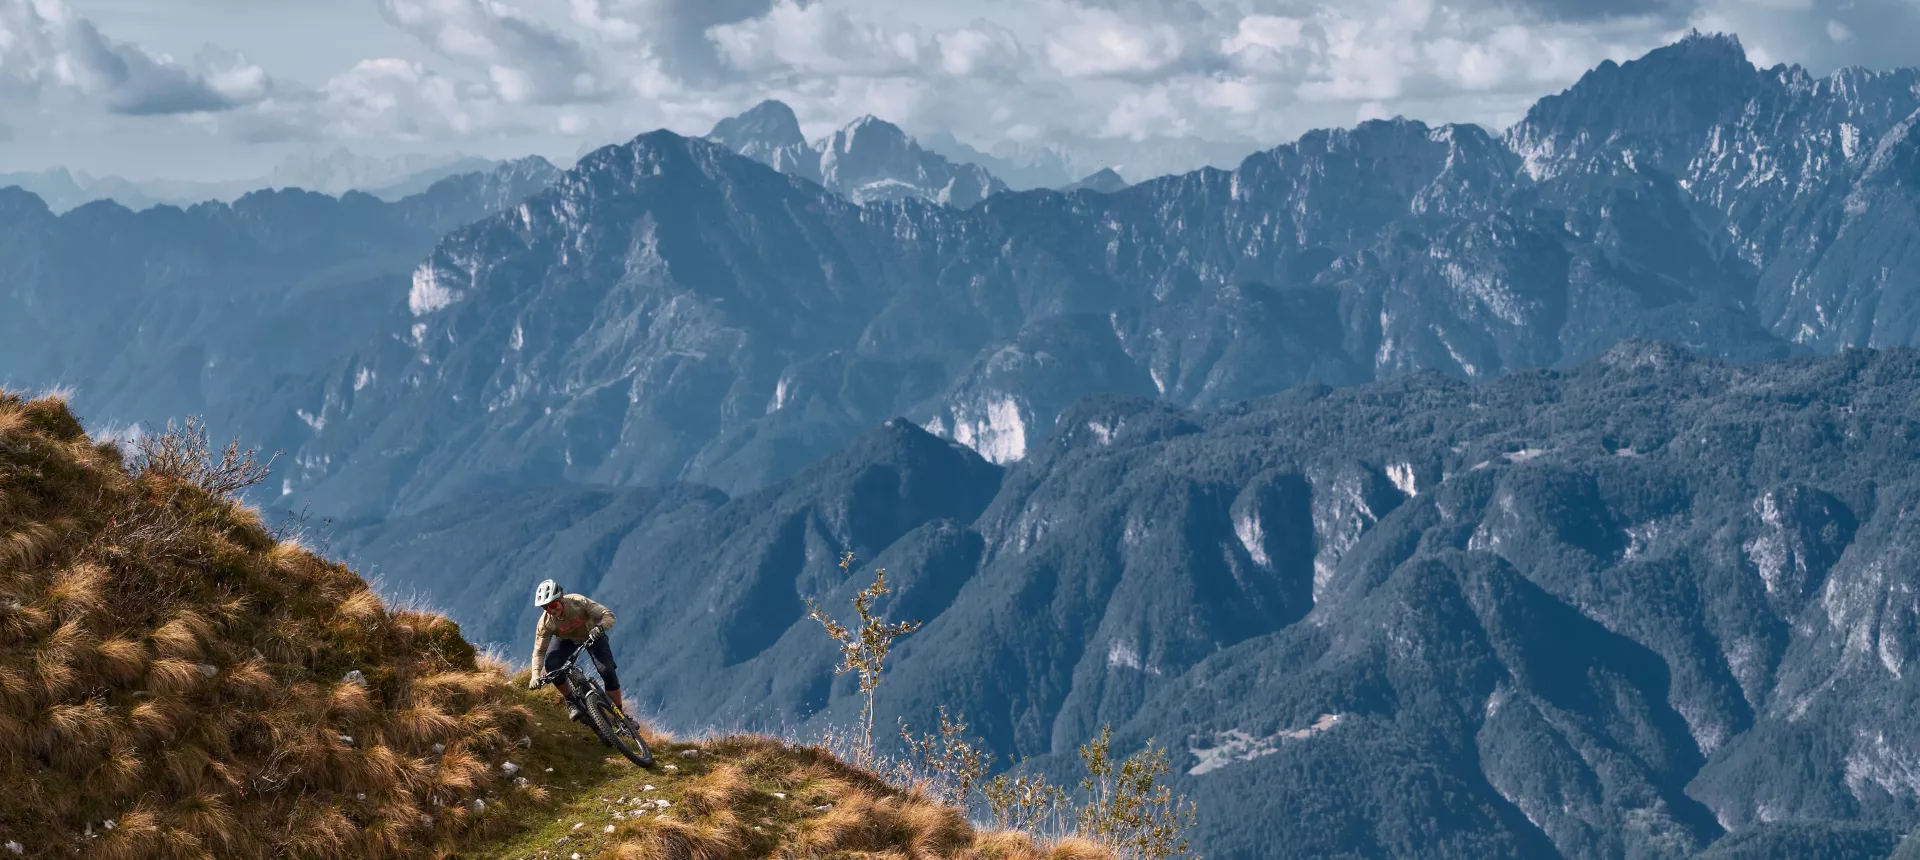 E-biking Adventure in the Julian Alps: Janek and Paweł's Thrilling Journey